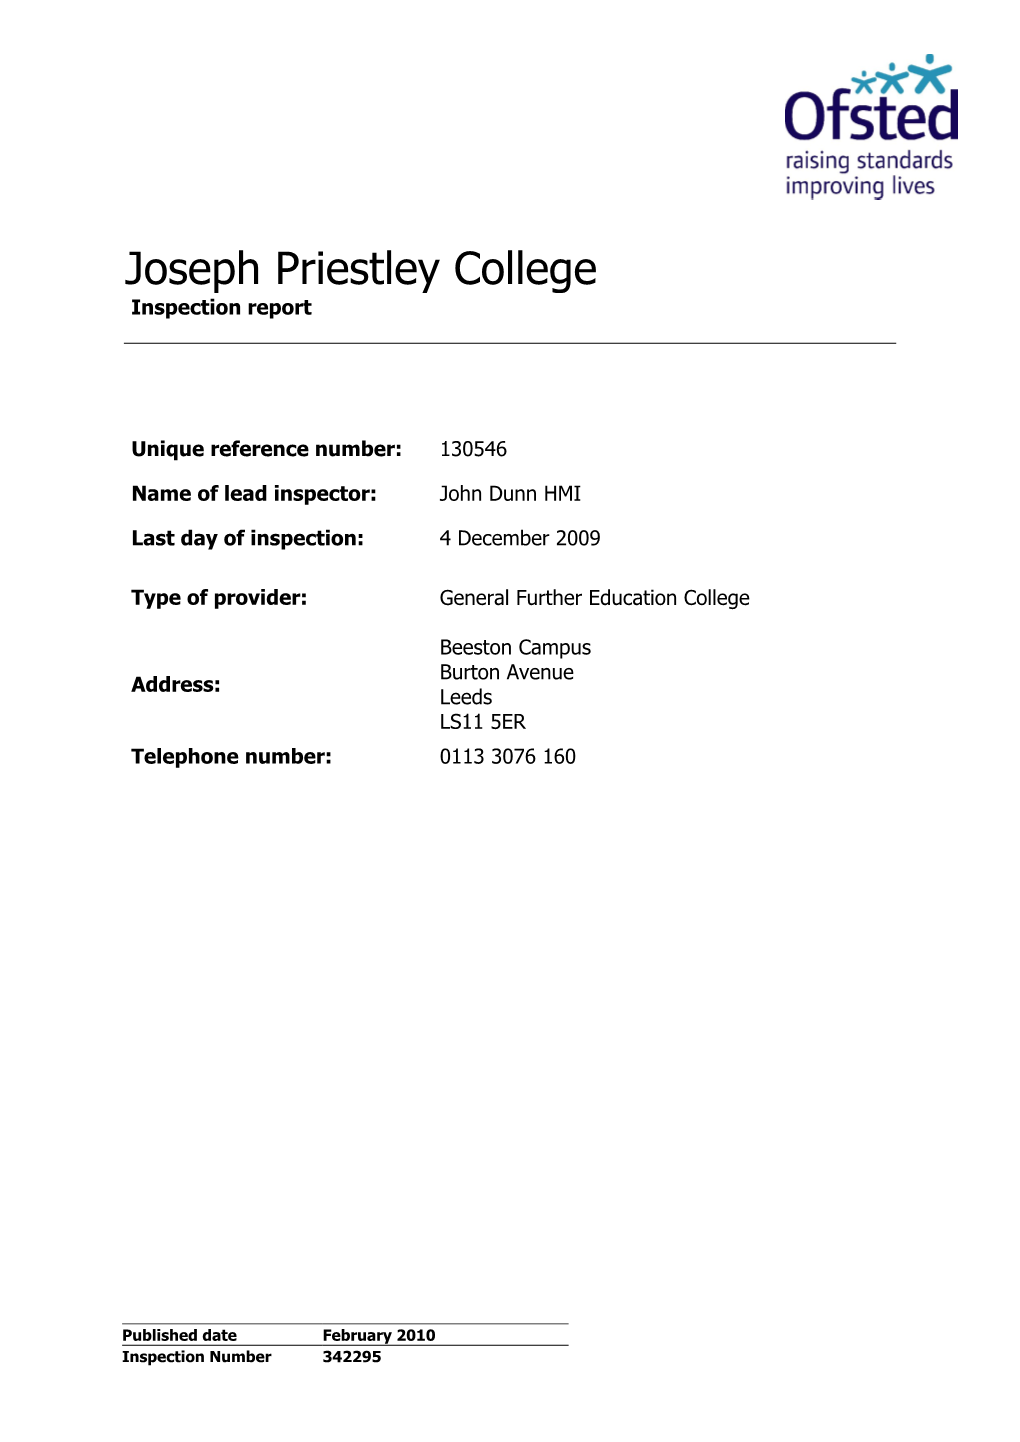 Joseph Priestley College Inspection Report